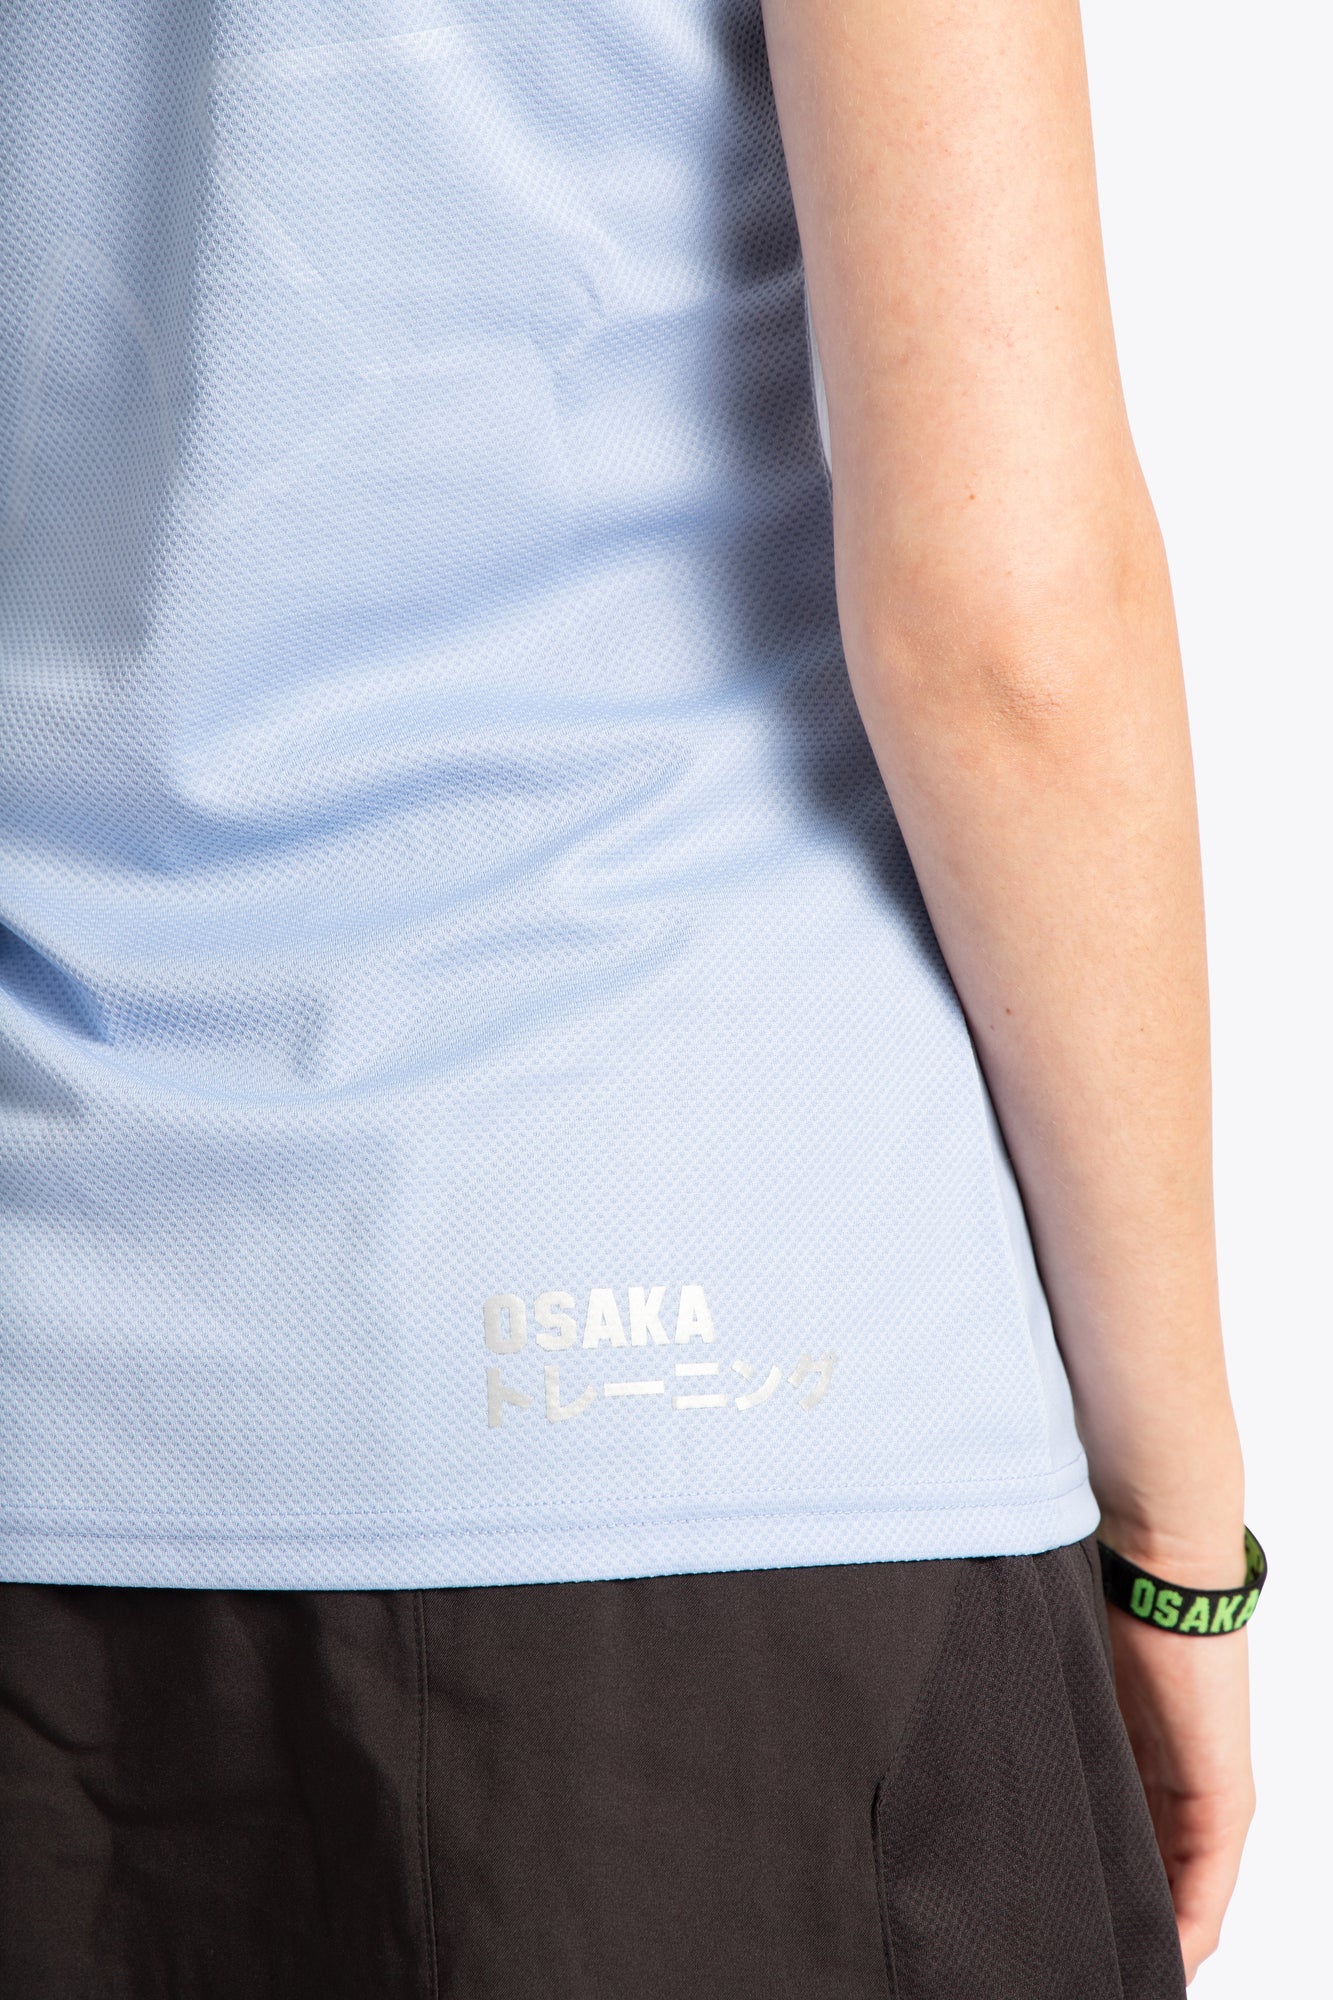 Osaka Women's Training Tee (Sky Blue) - Padellife.dk